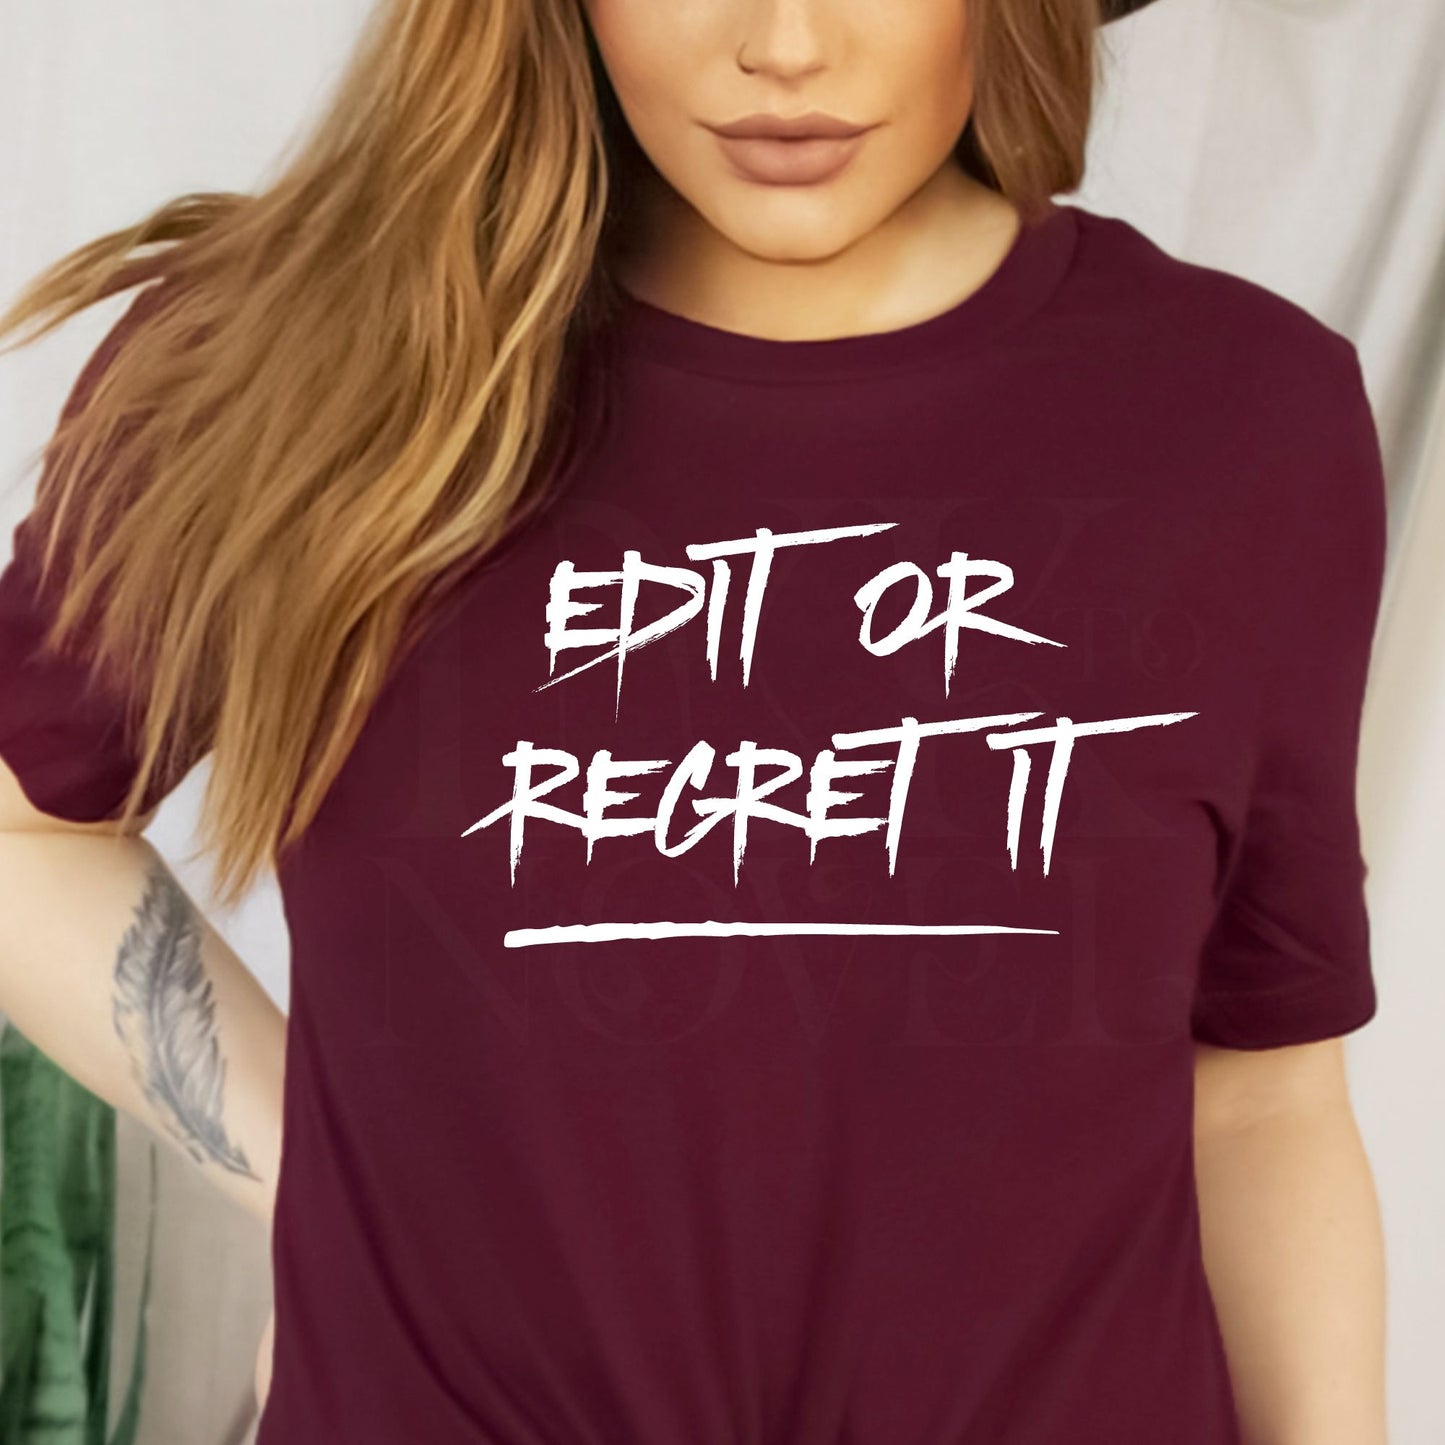 Edit or Regret It T-Shirt